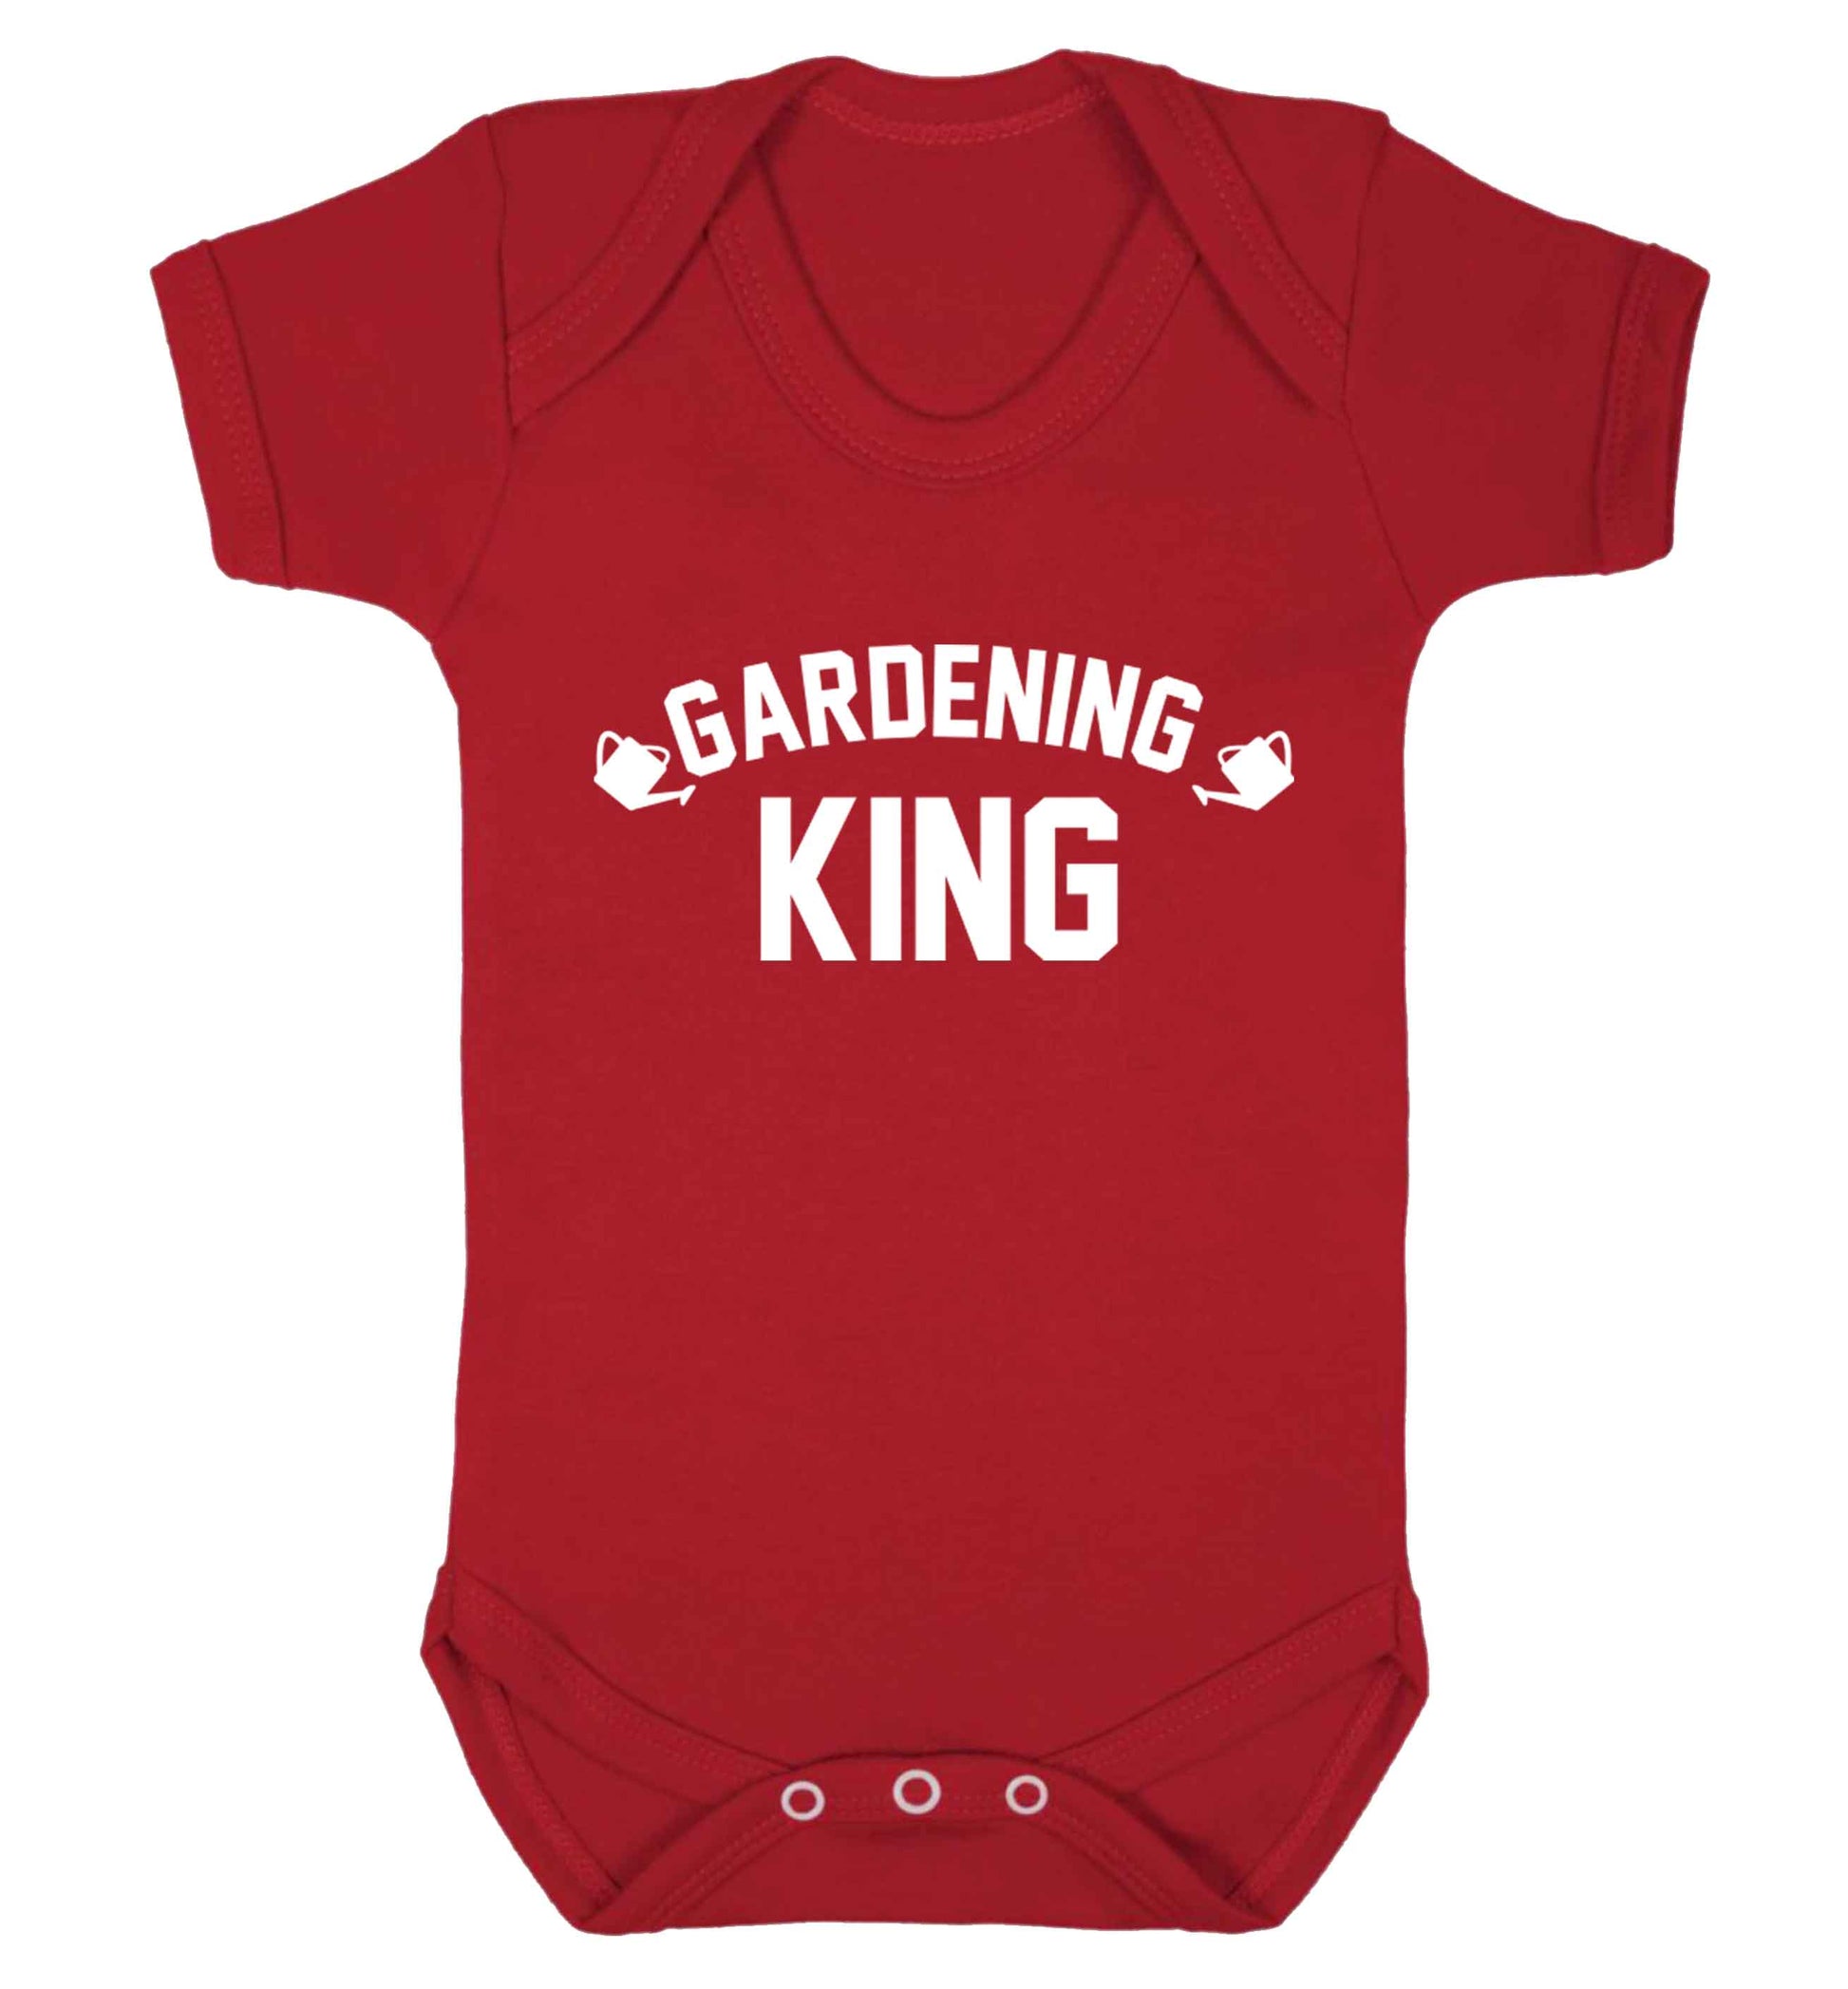 Gardening king Baby Vest red 18-24 months